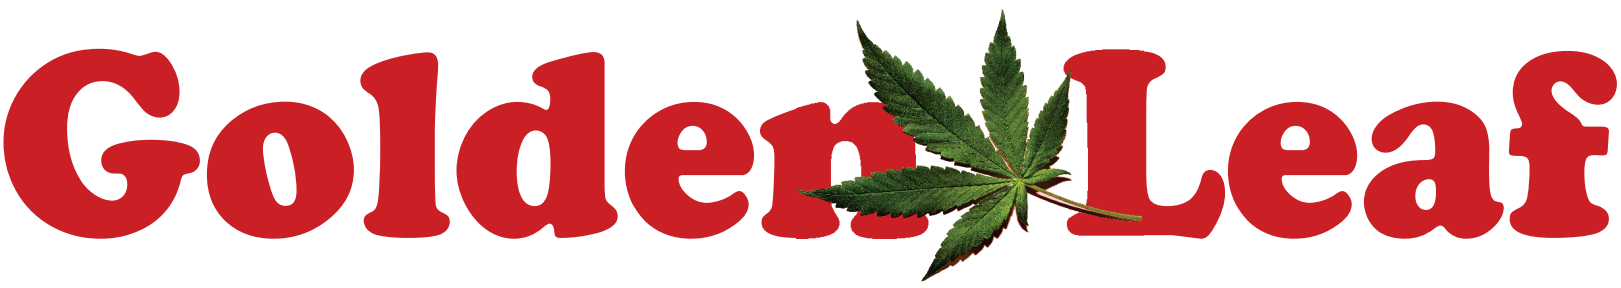 Golden Leaf Cannabis